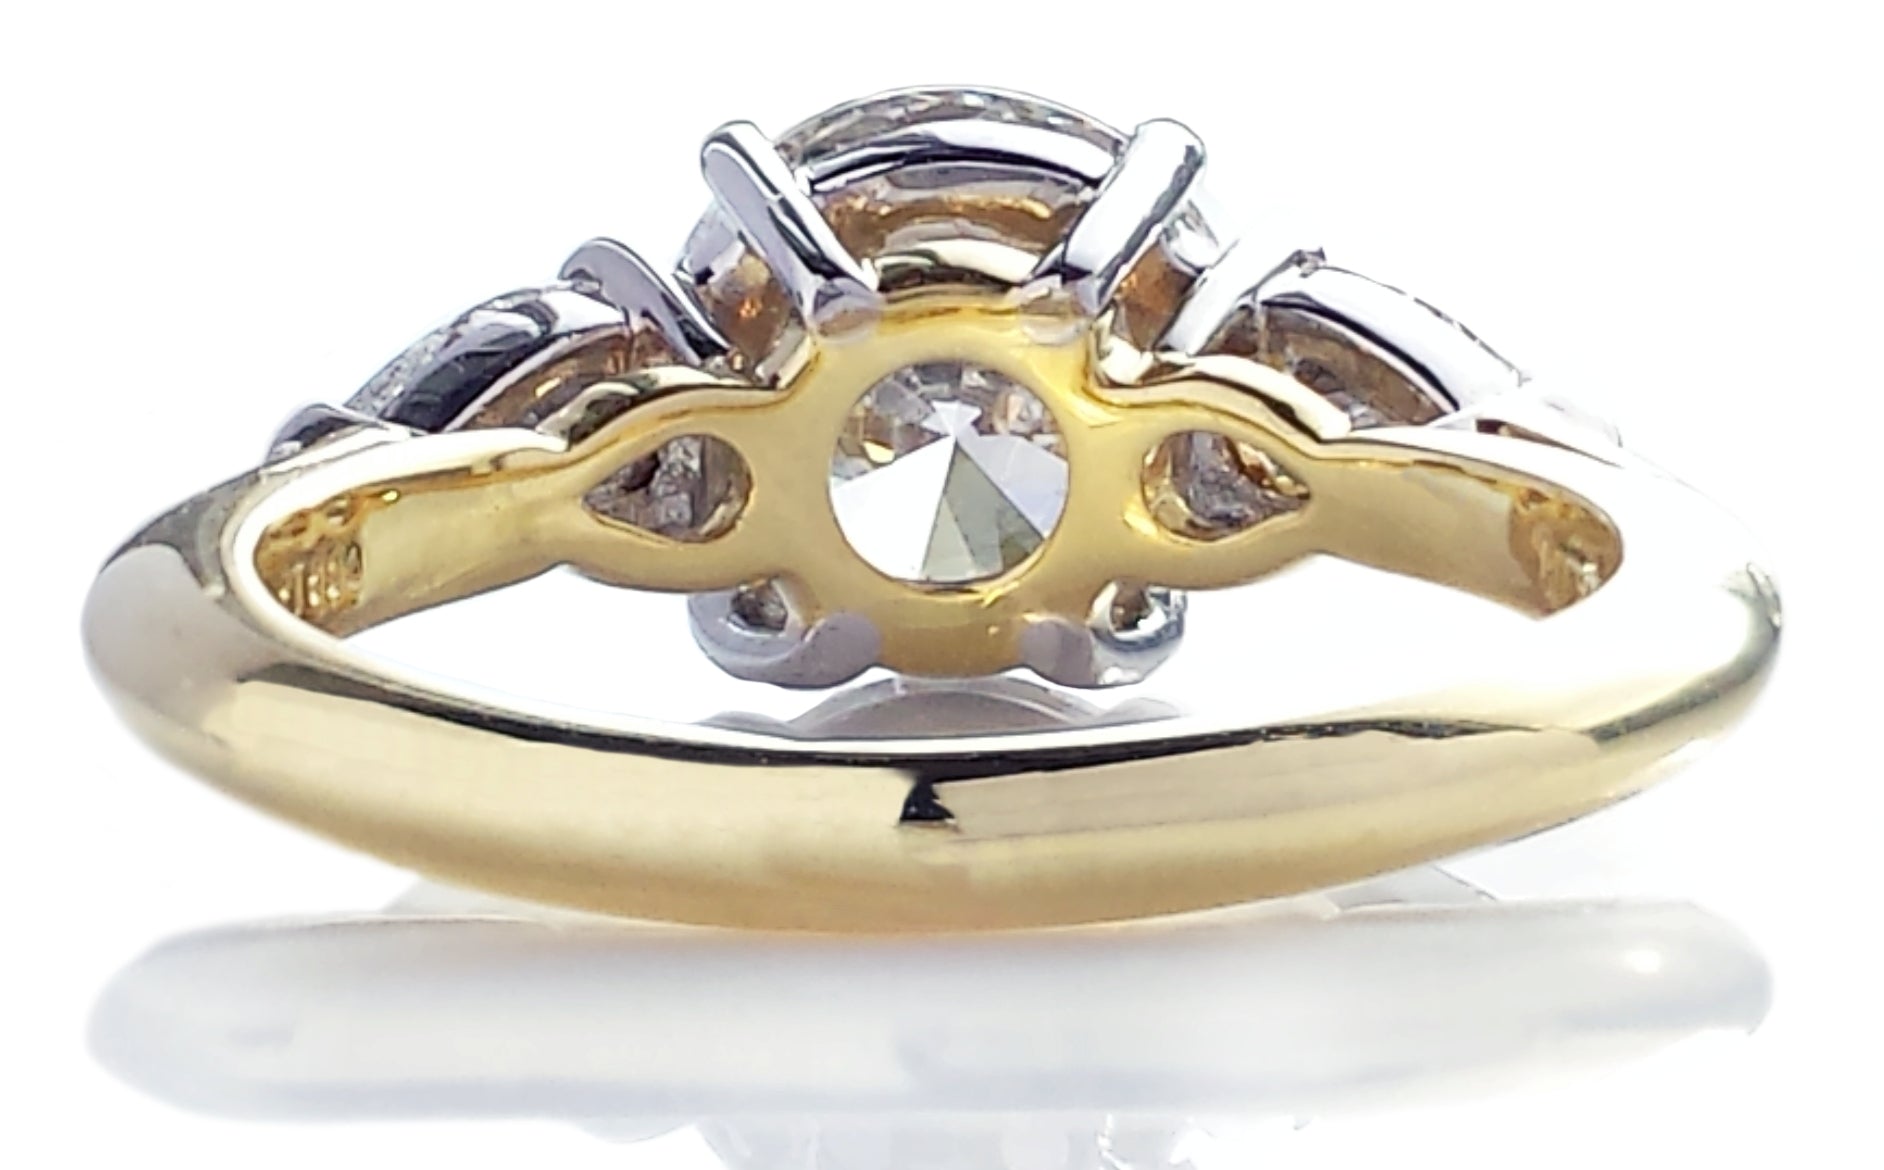 Tiffany & Co. 2.75tcw F/VS1 Three Stone Diamond Engagement Ring with Pear-shaped side stones